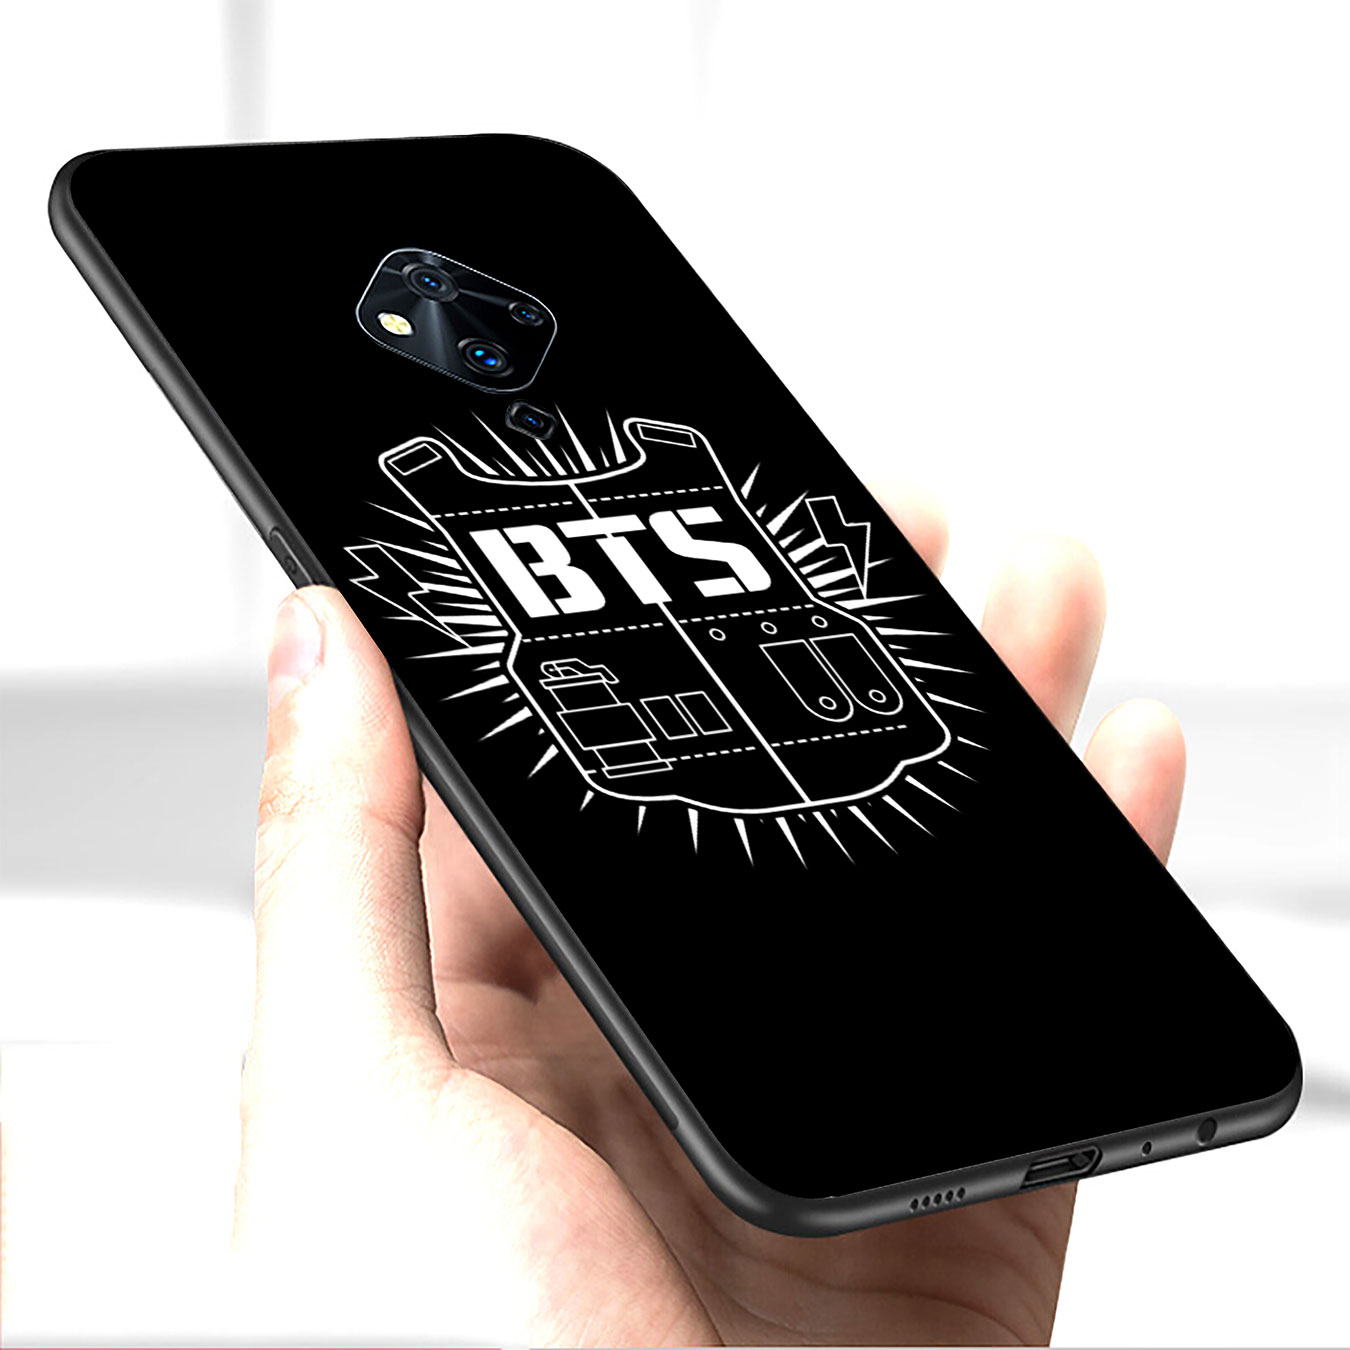 Ốp điện thoại silicon mềm họa tiết BTS Fake Love cho iPhone 12 Mini 11 Max Pro SE 2020 XR